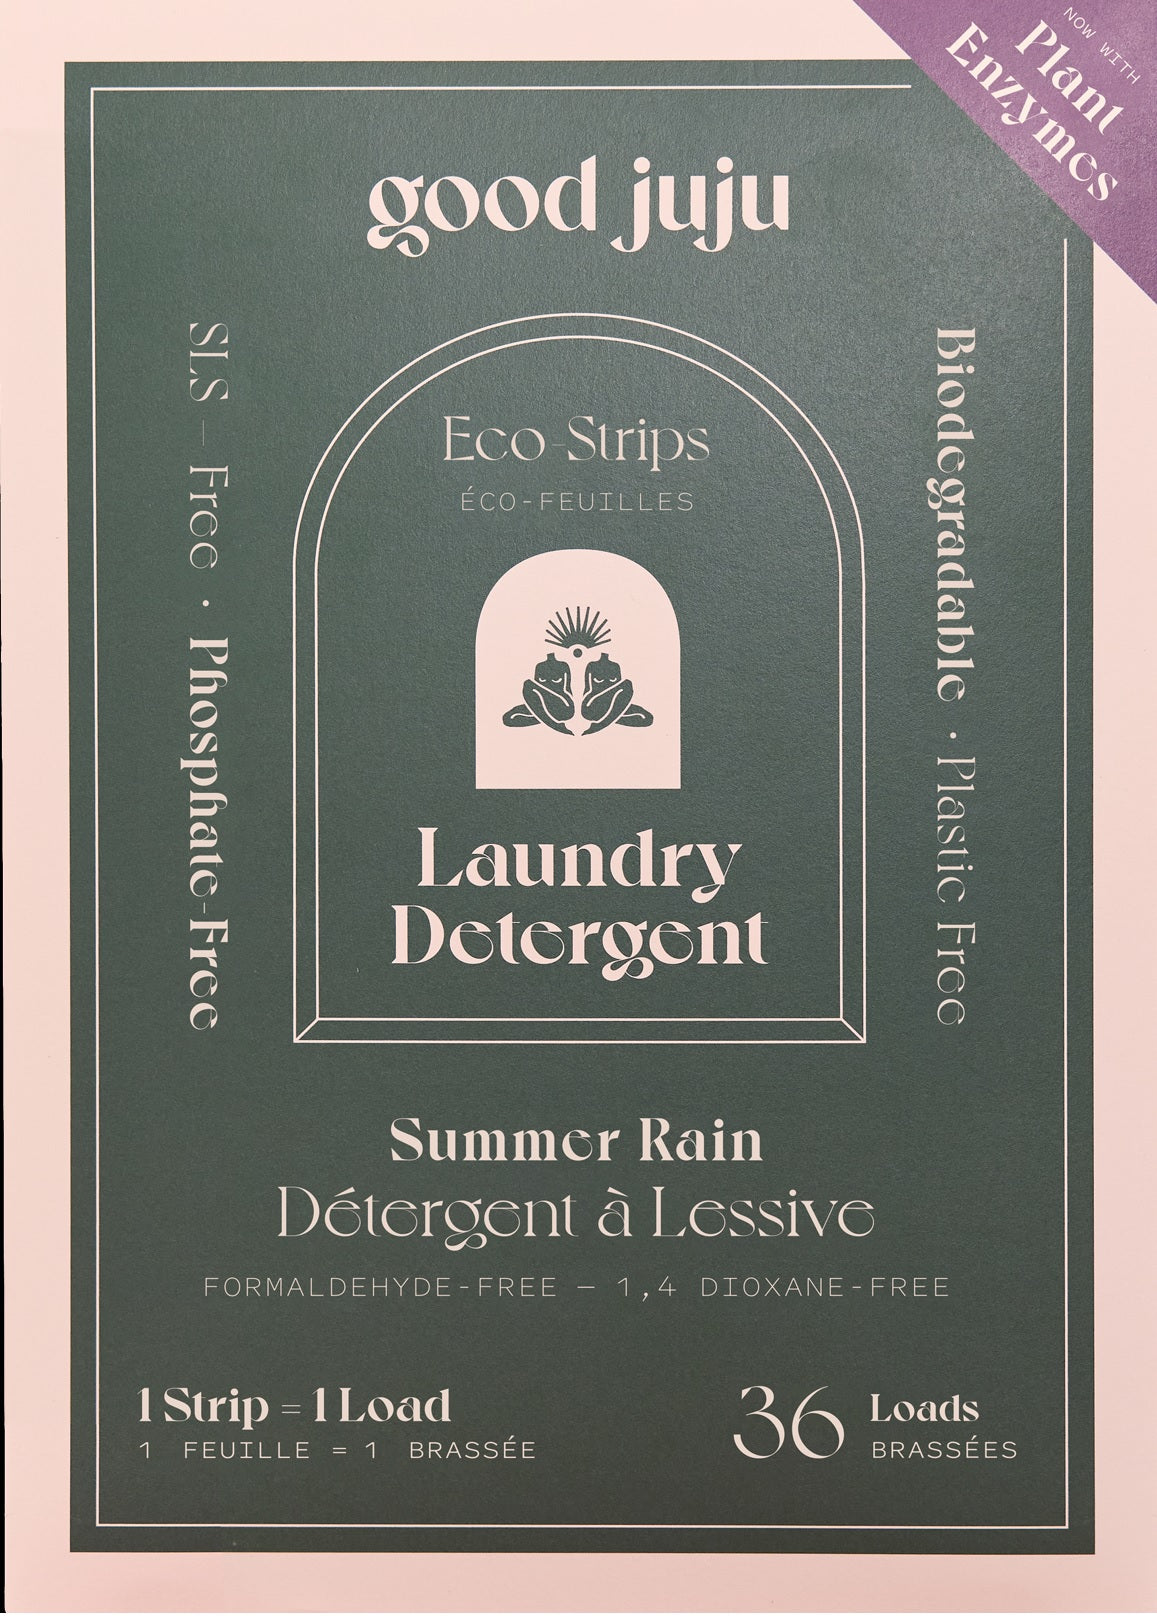 Good Juju - Laundry Detergent Eco-Strips (Summer Rain)